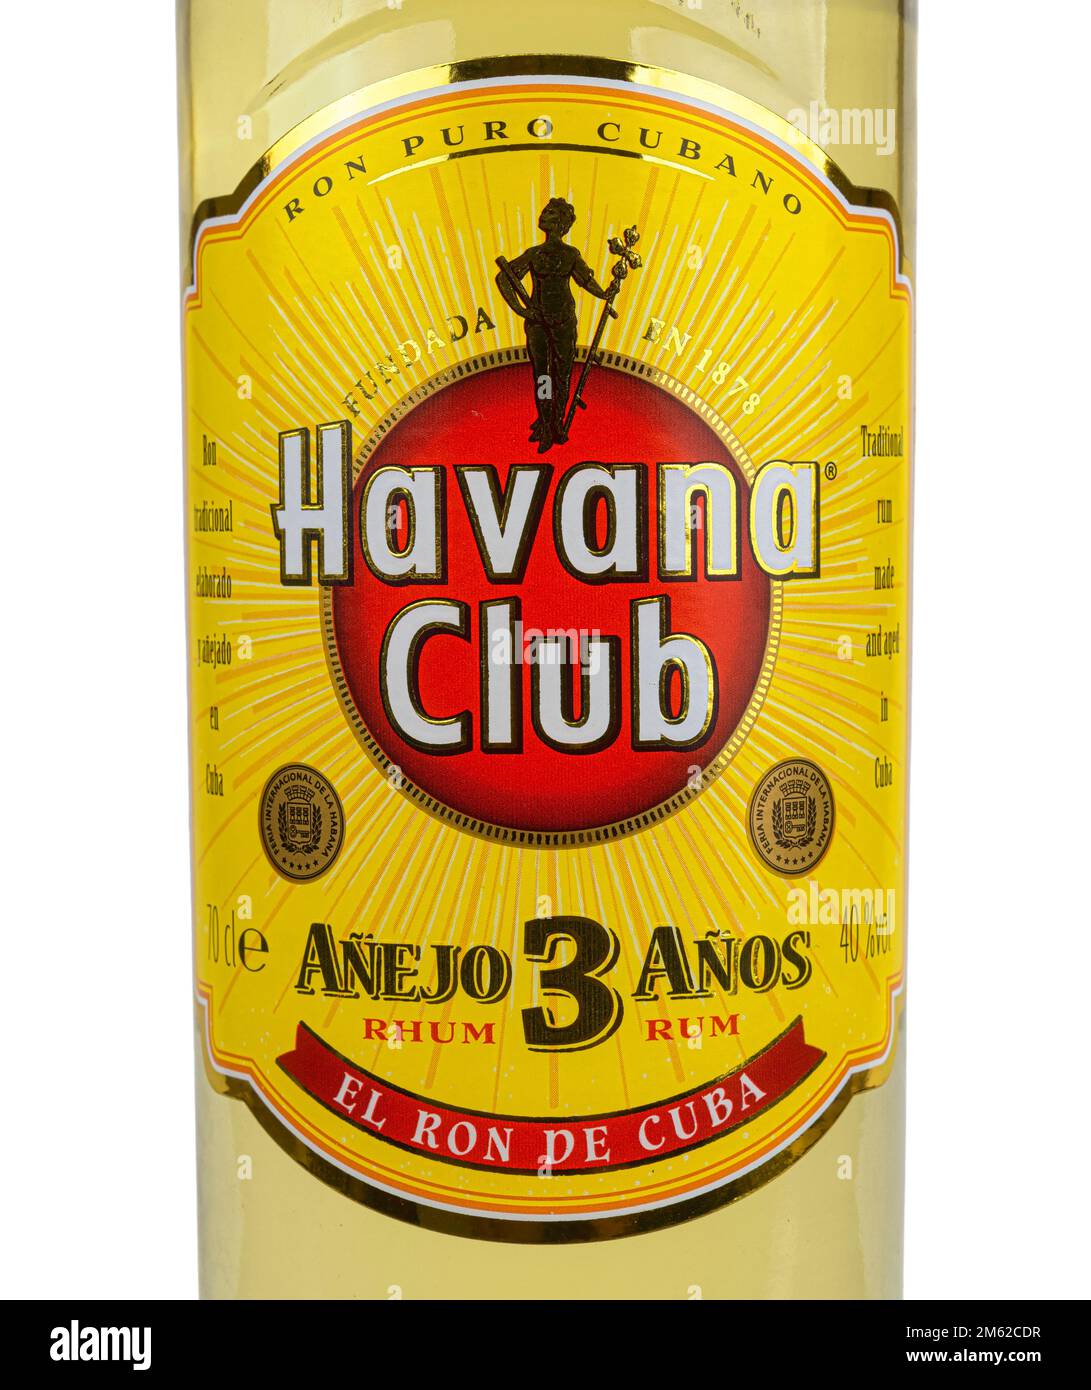 Label of a Havana Club rum bottle (Cuba) Stock Photo